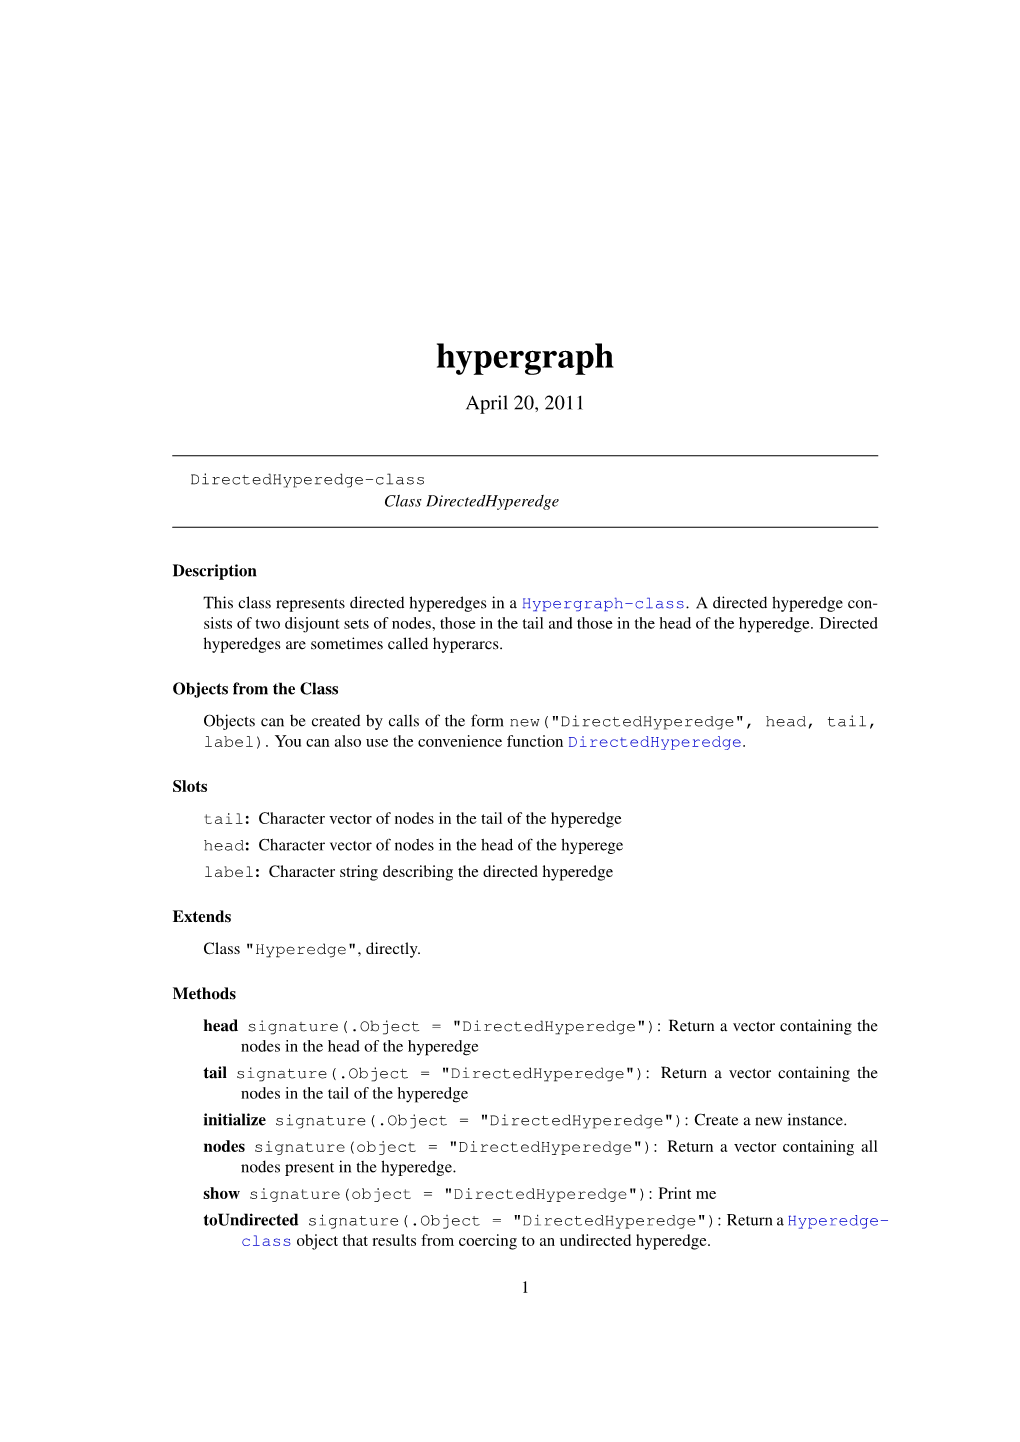 Hypergraph April 20, 2011